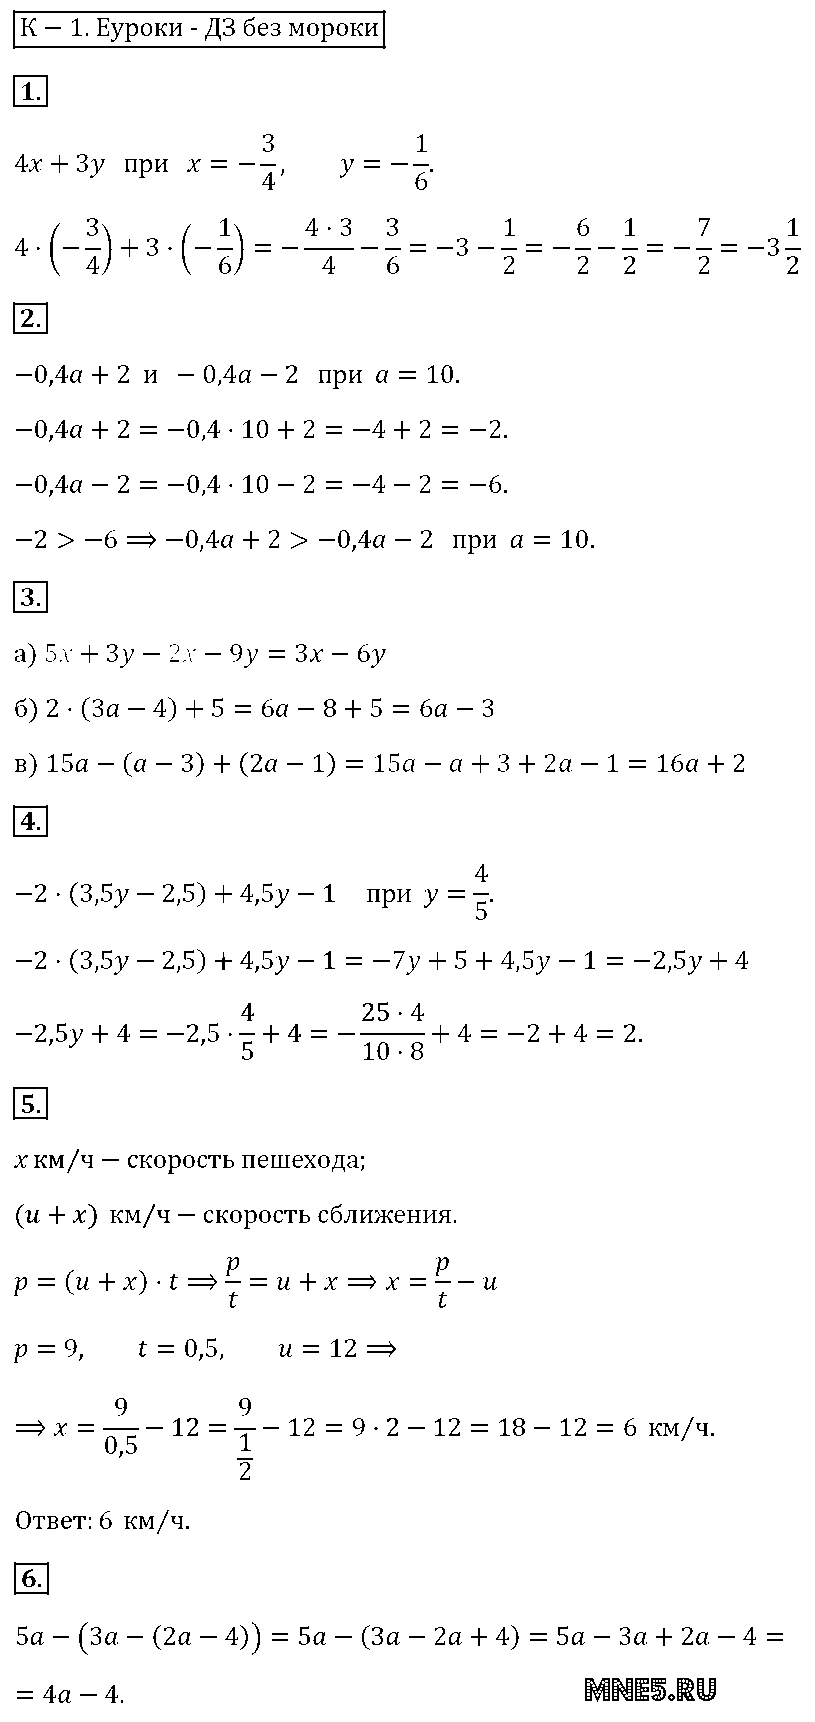 ГДЗ Алгебра 7 класс - К-1